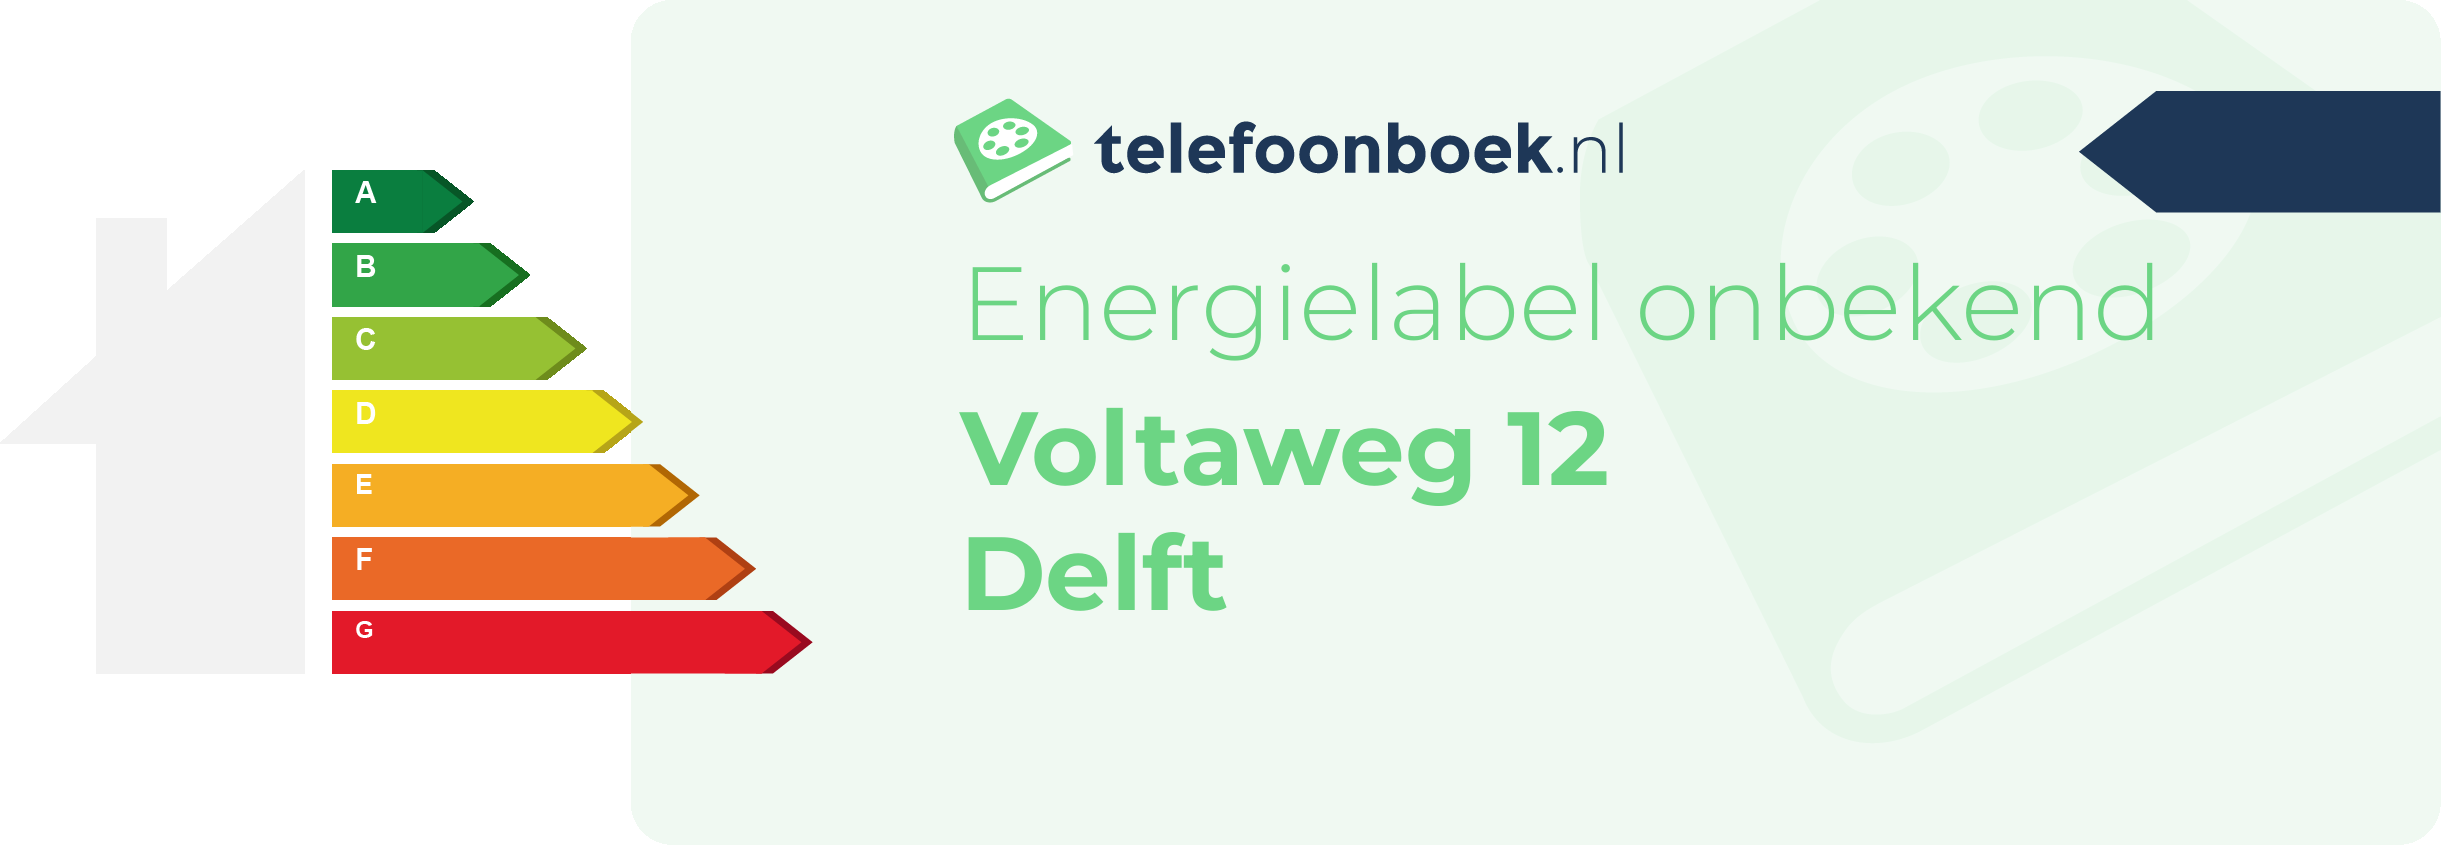 Energielabel Voltaweg 12 Delft